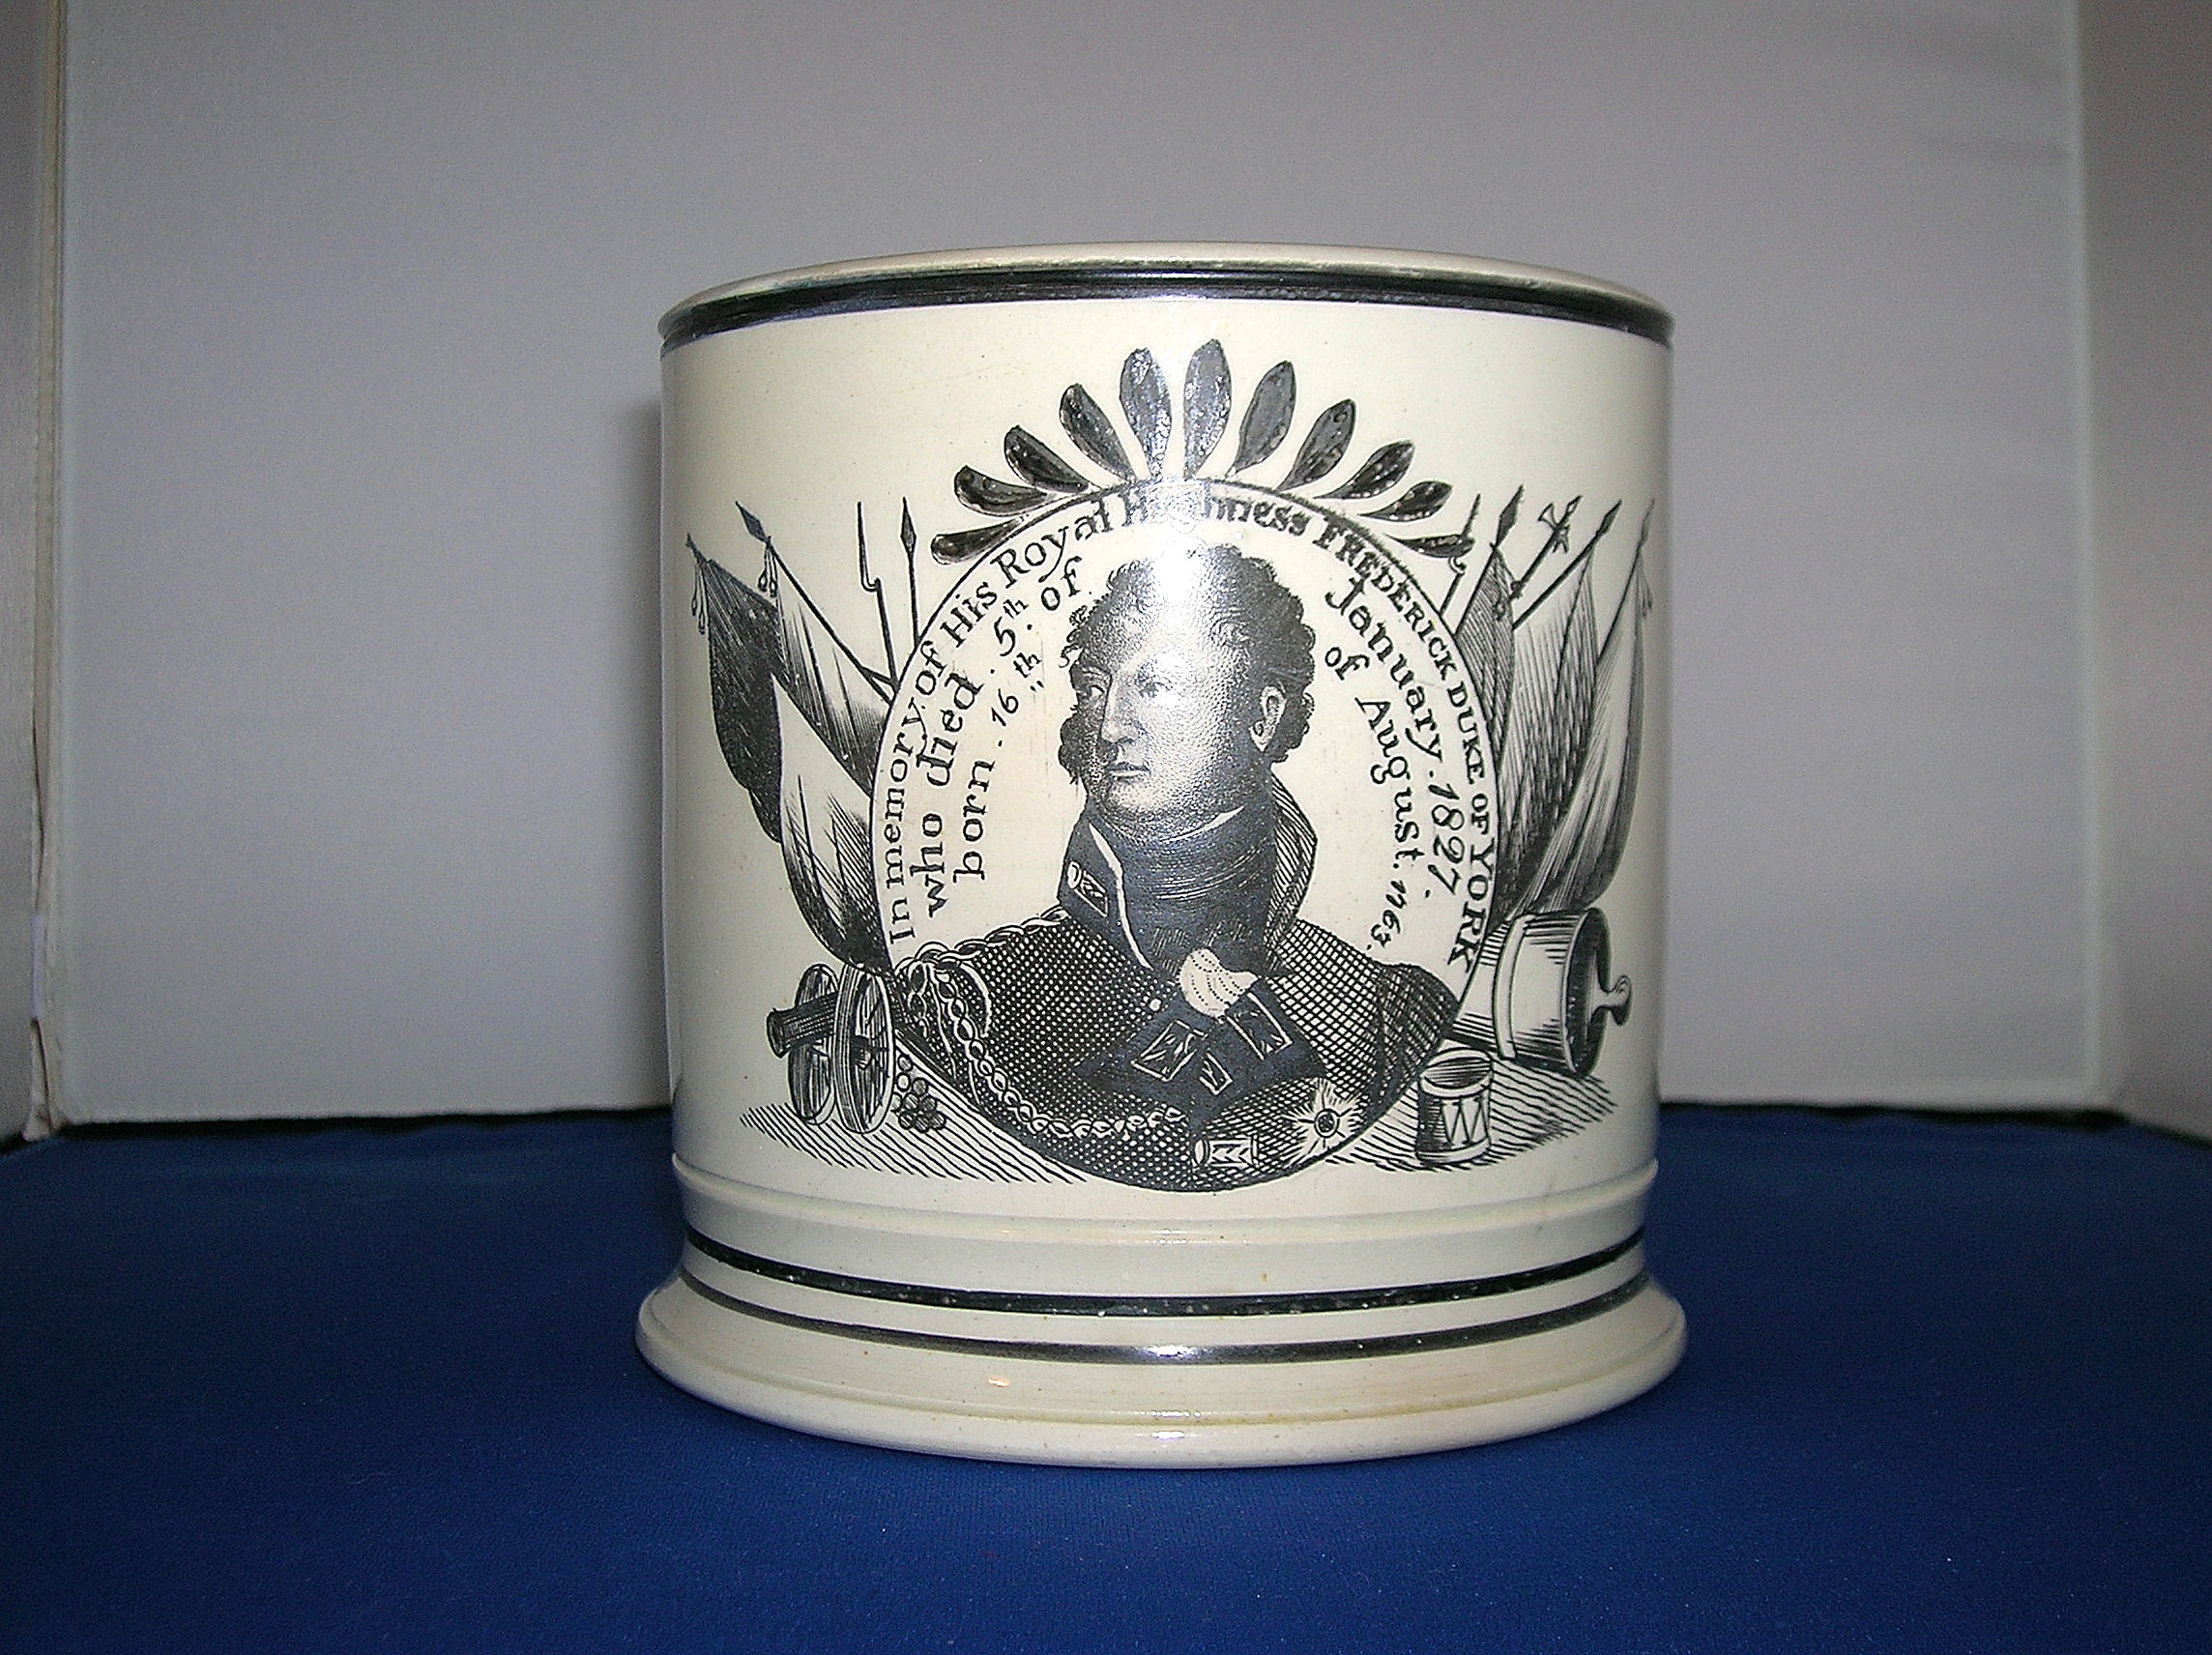 1827 Death of the Duke of York mug.